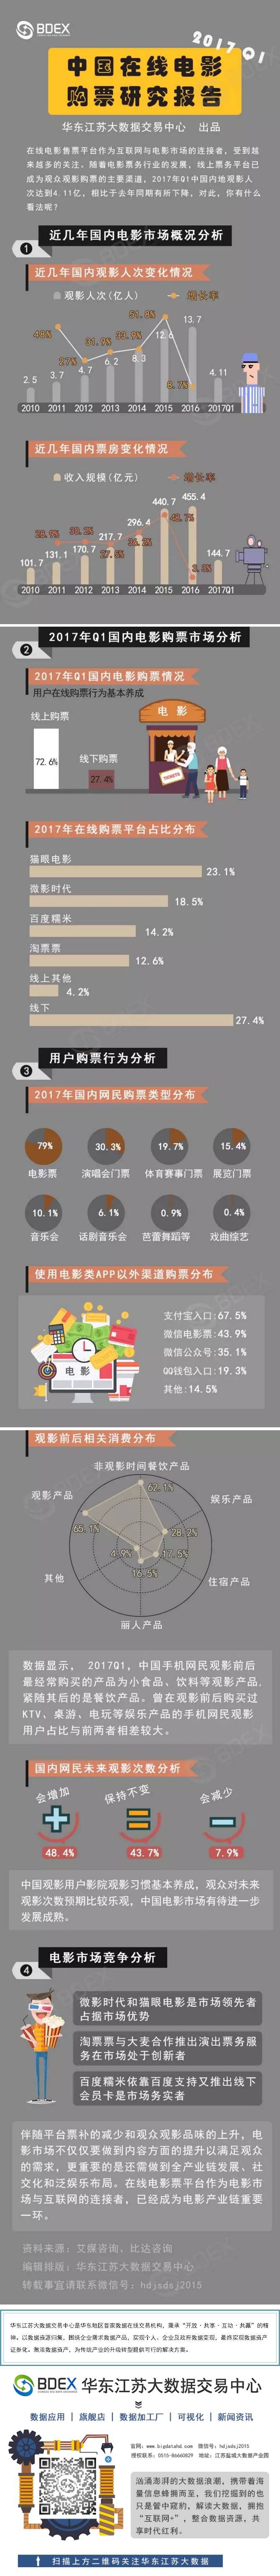 2017Q1中国在线电影购票研究报告.png